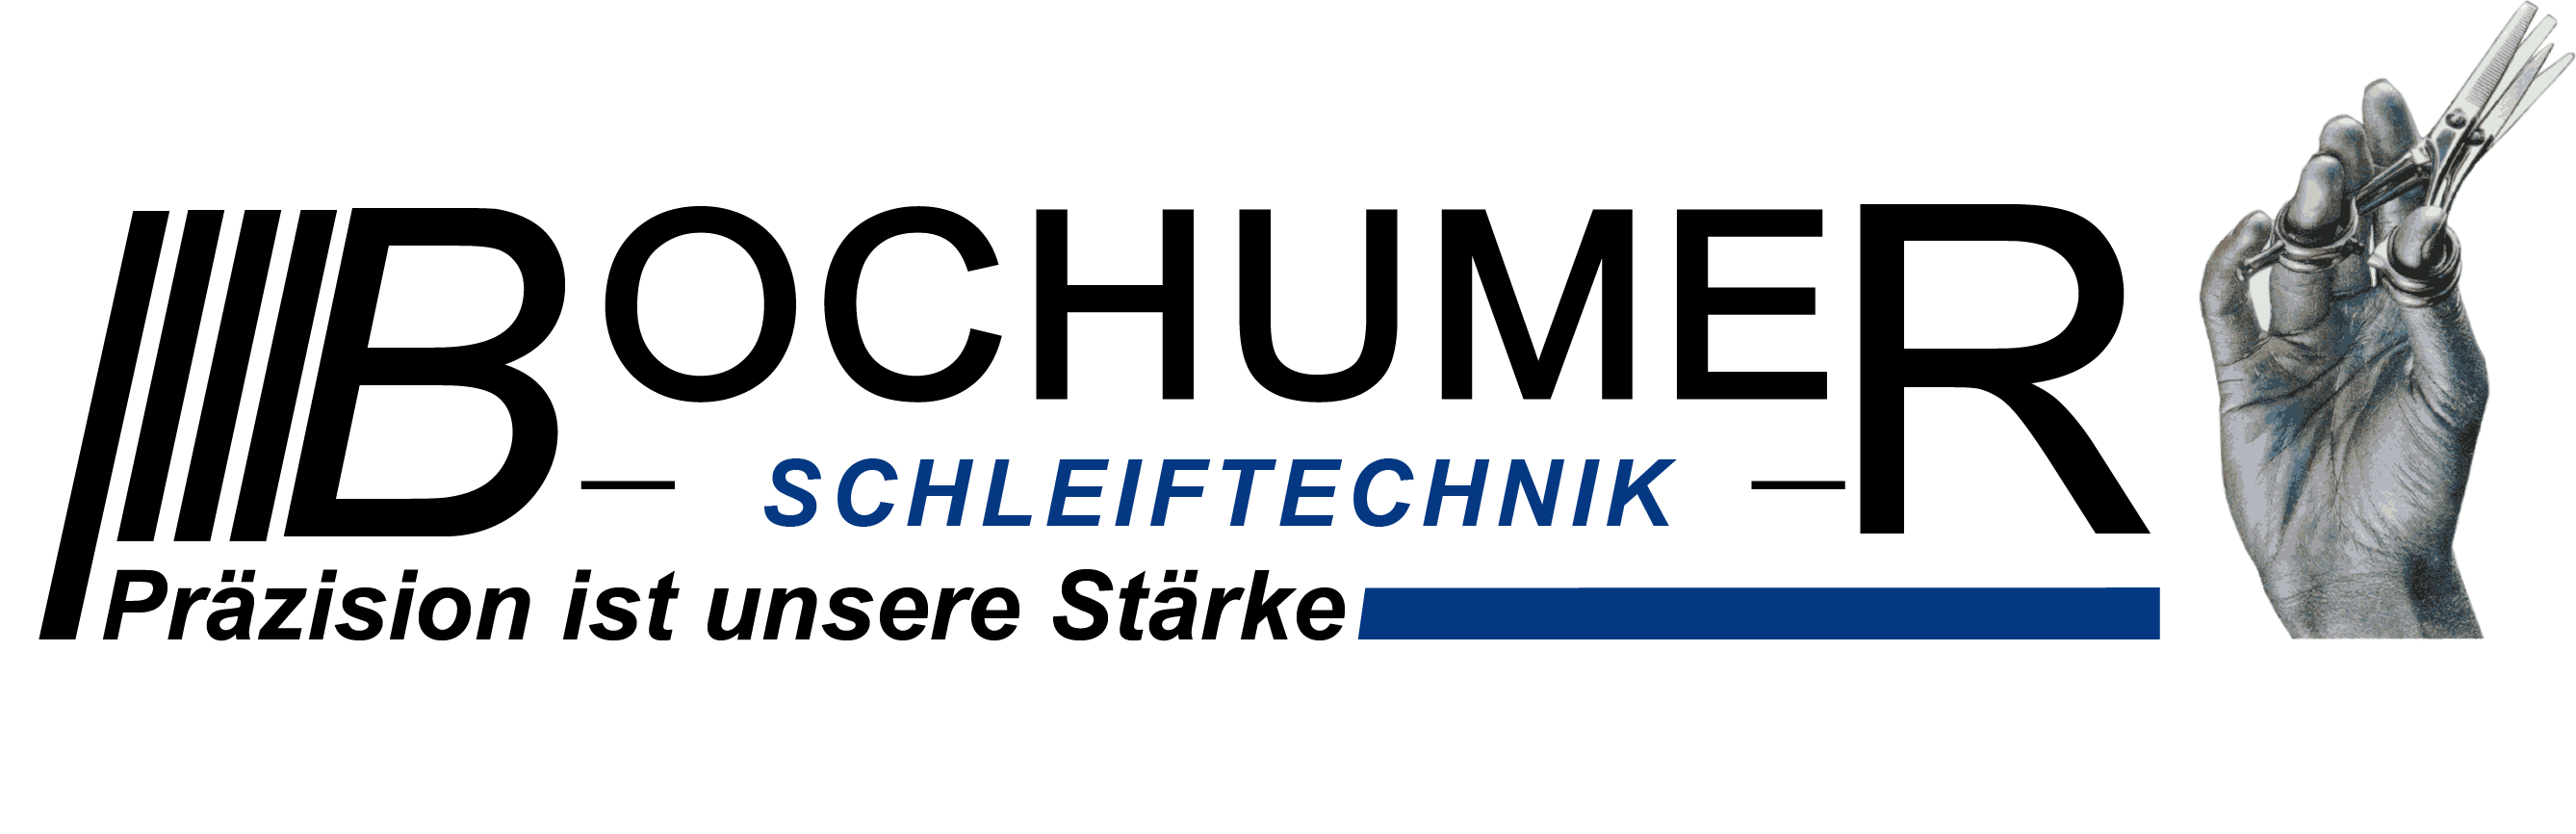 Bochumer-Schleiftechnik